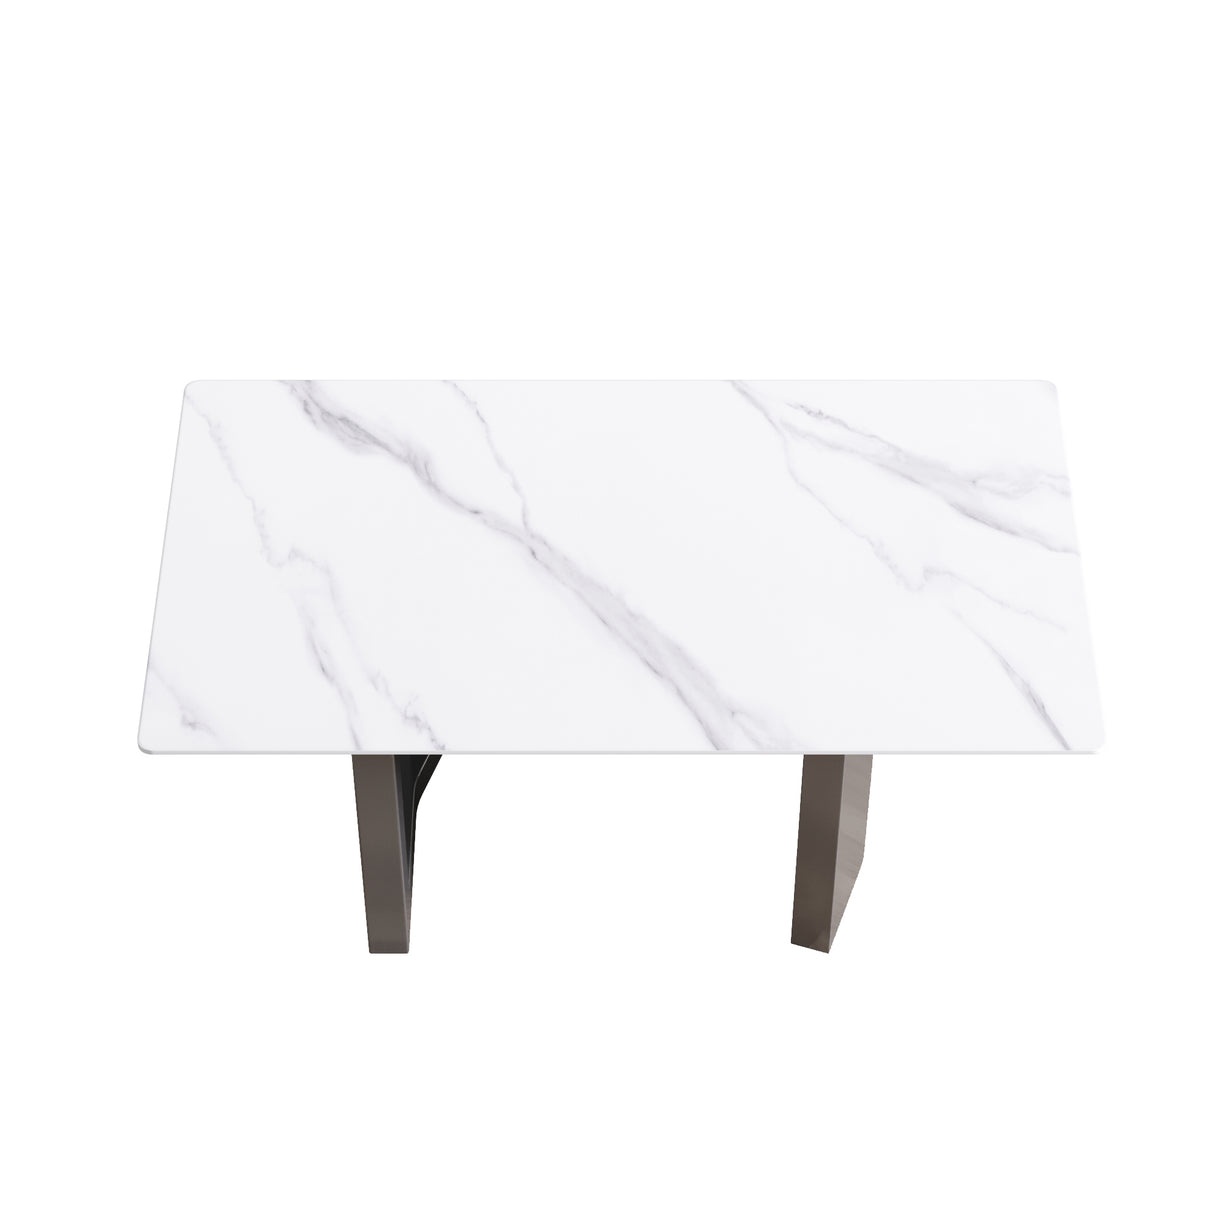 63"Modern artificial stone white straight edge black metal leg dining table -6 people - Home Elegance USA